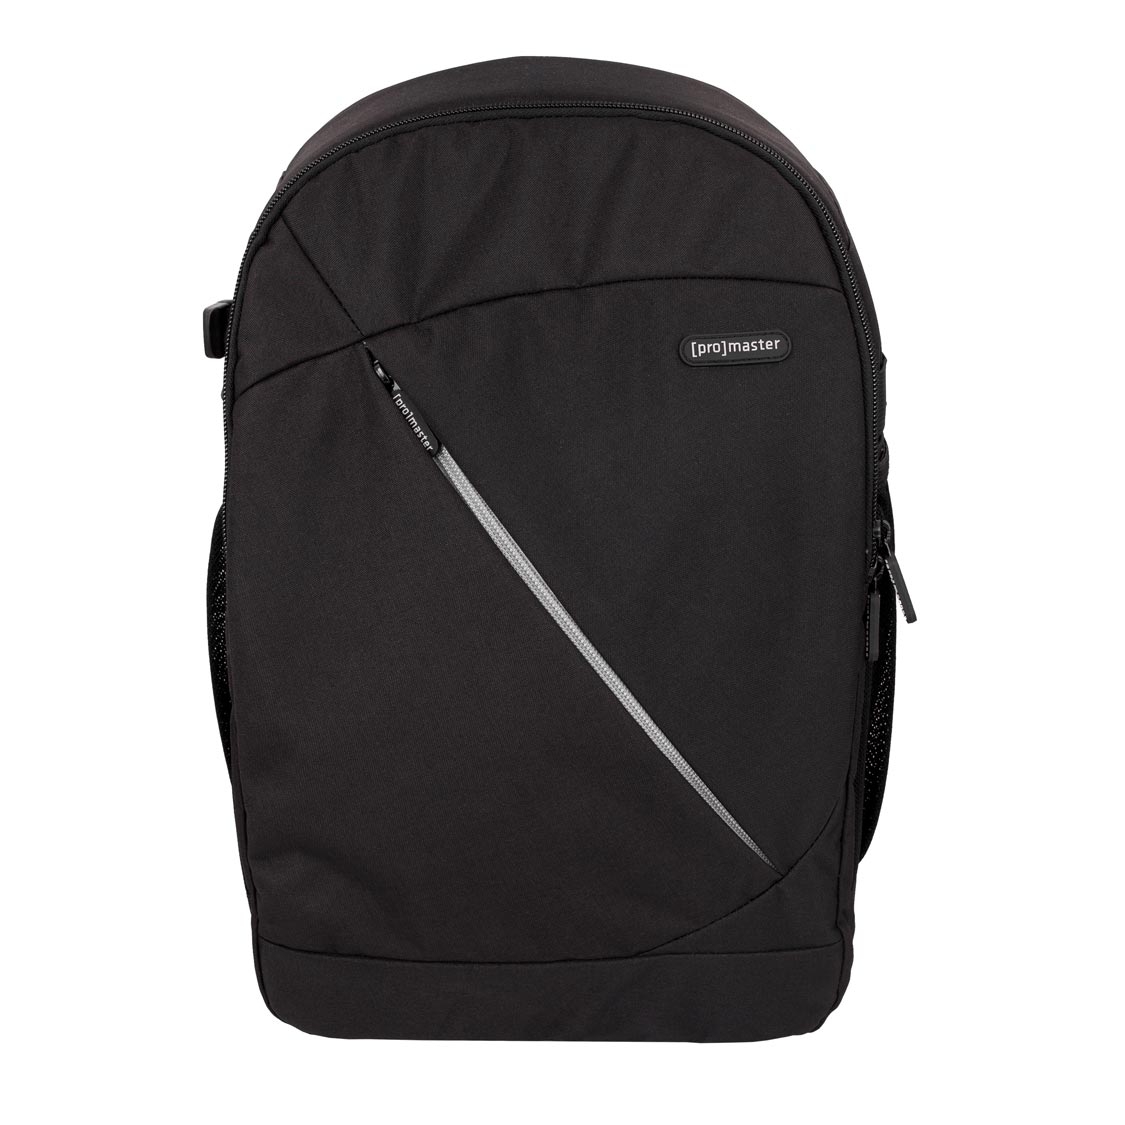 Promaster Impulse Backpack Large (black)